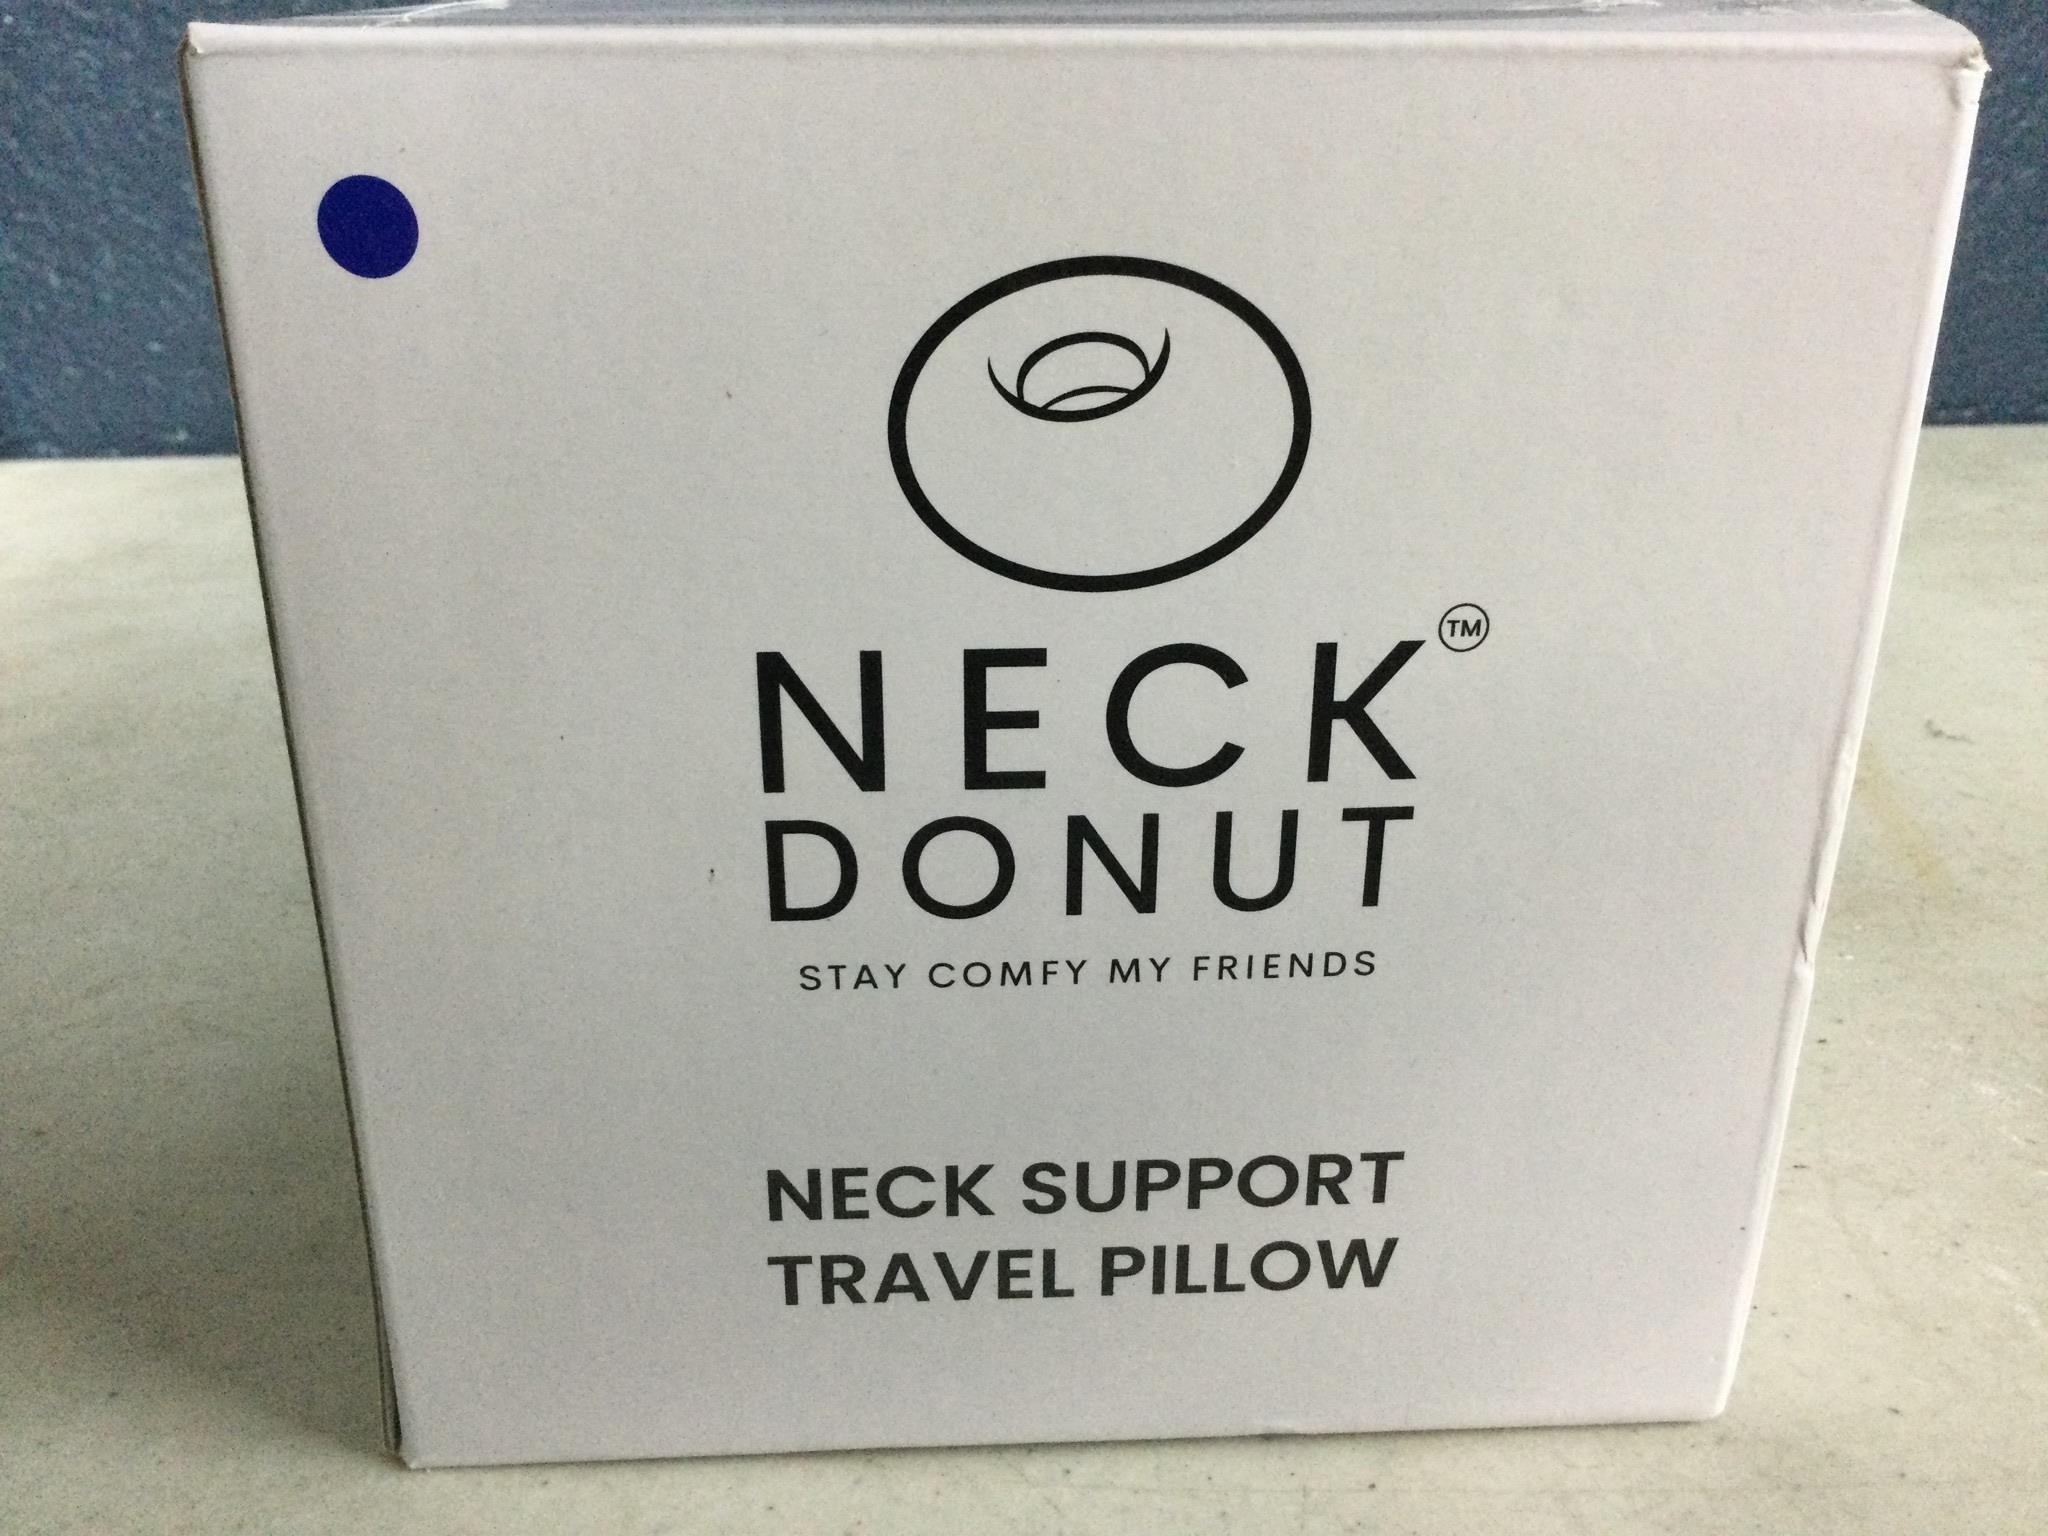 Blue neck support travel pillow